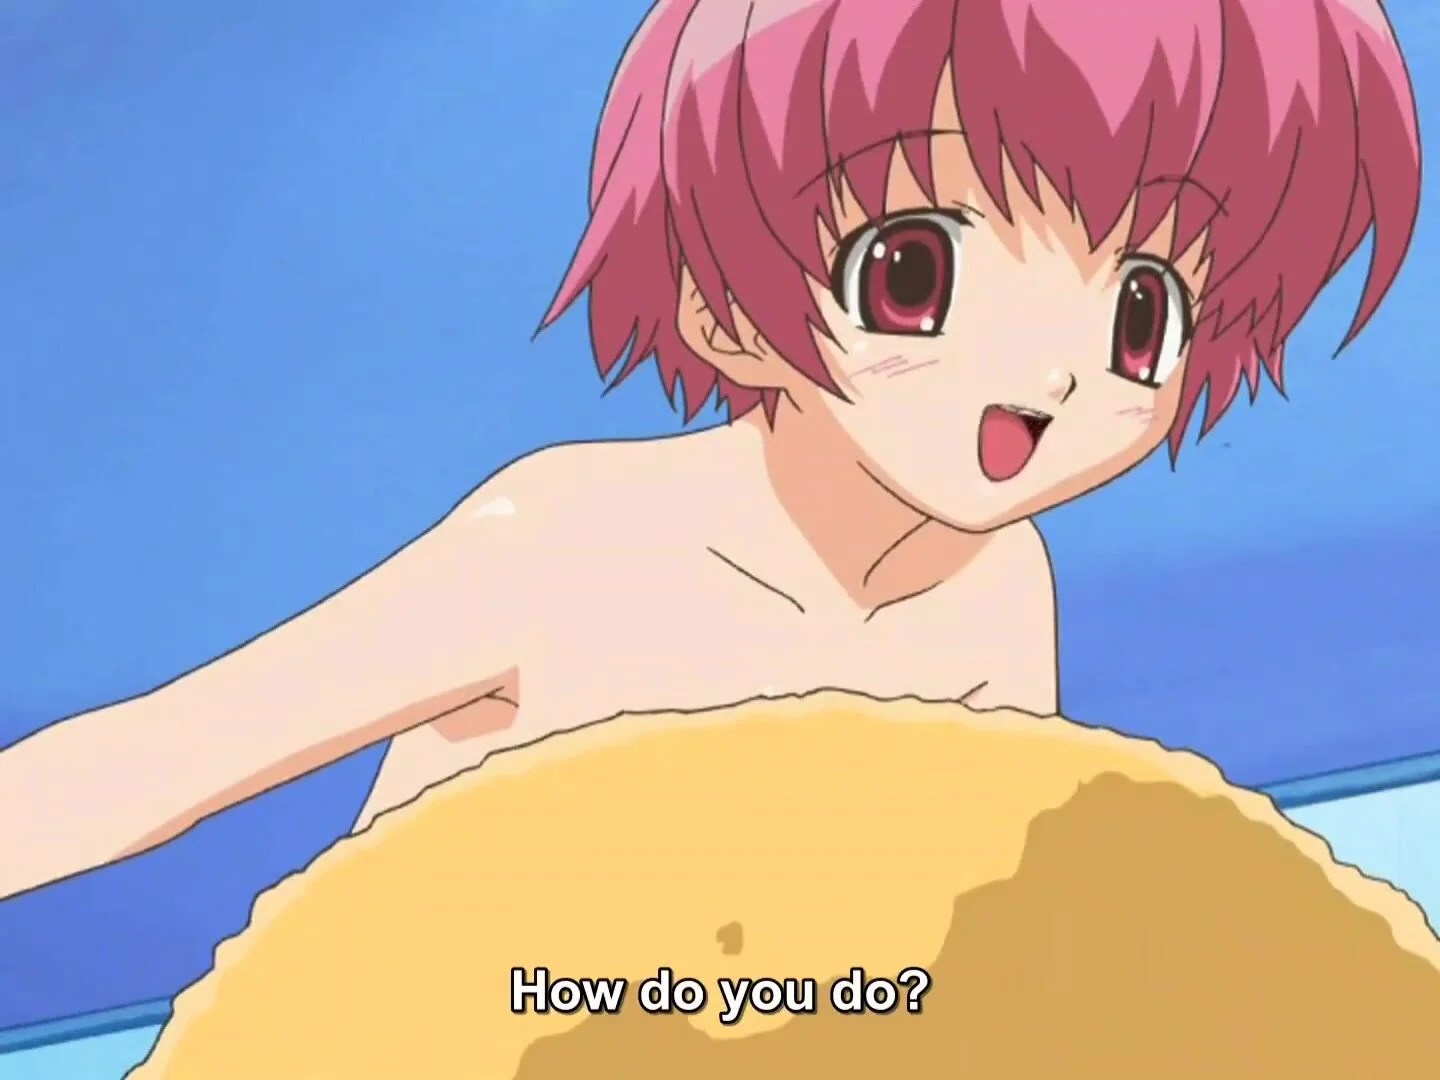 Naked Anime Bukkake - Naked anime girl censored in funny ways - ThisVid.com